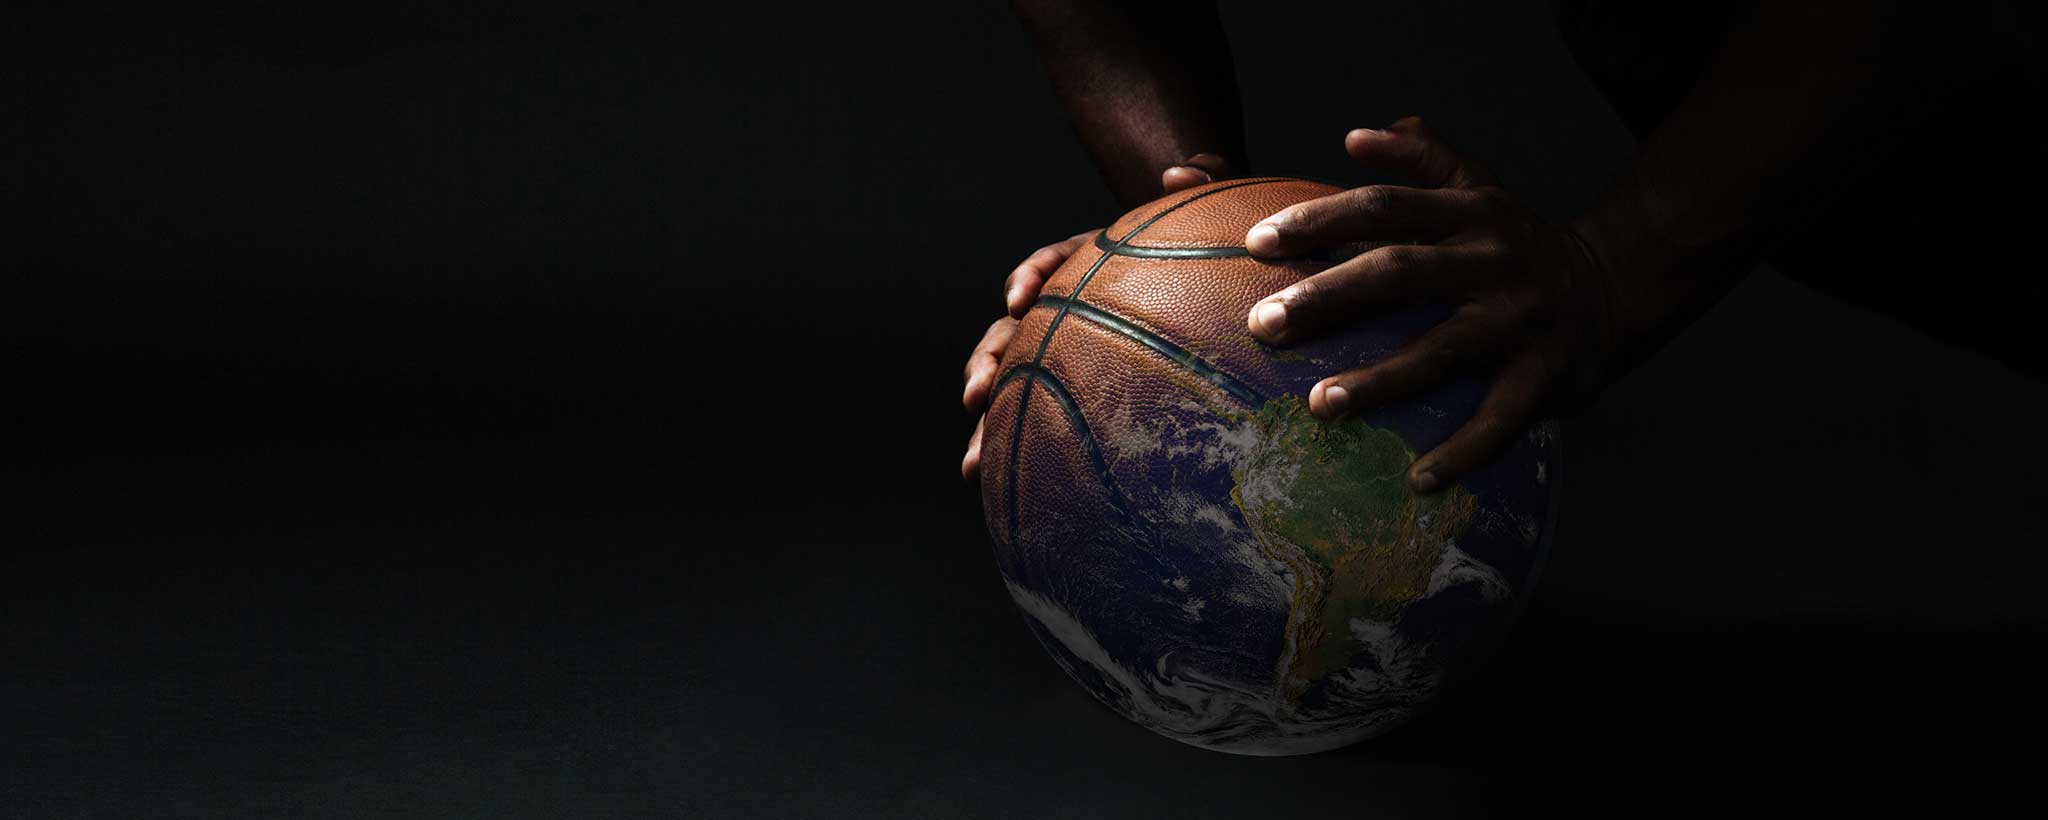 'Hands holding basketball'